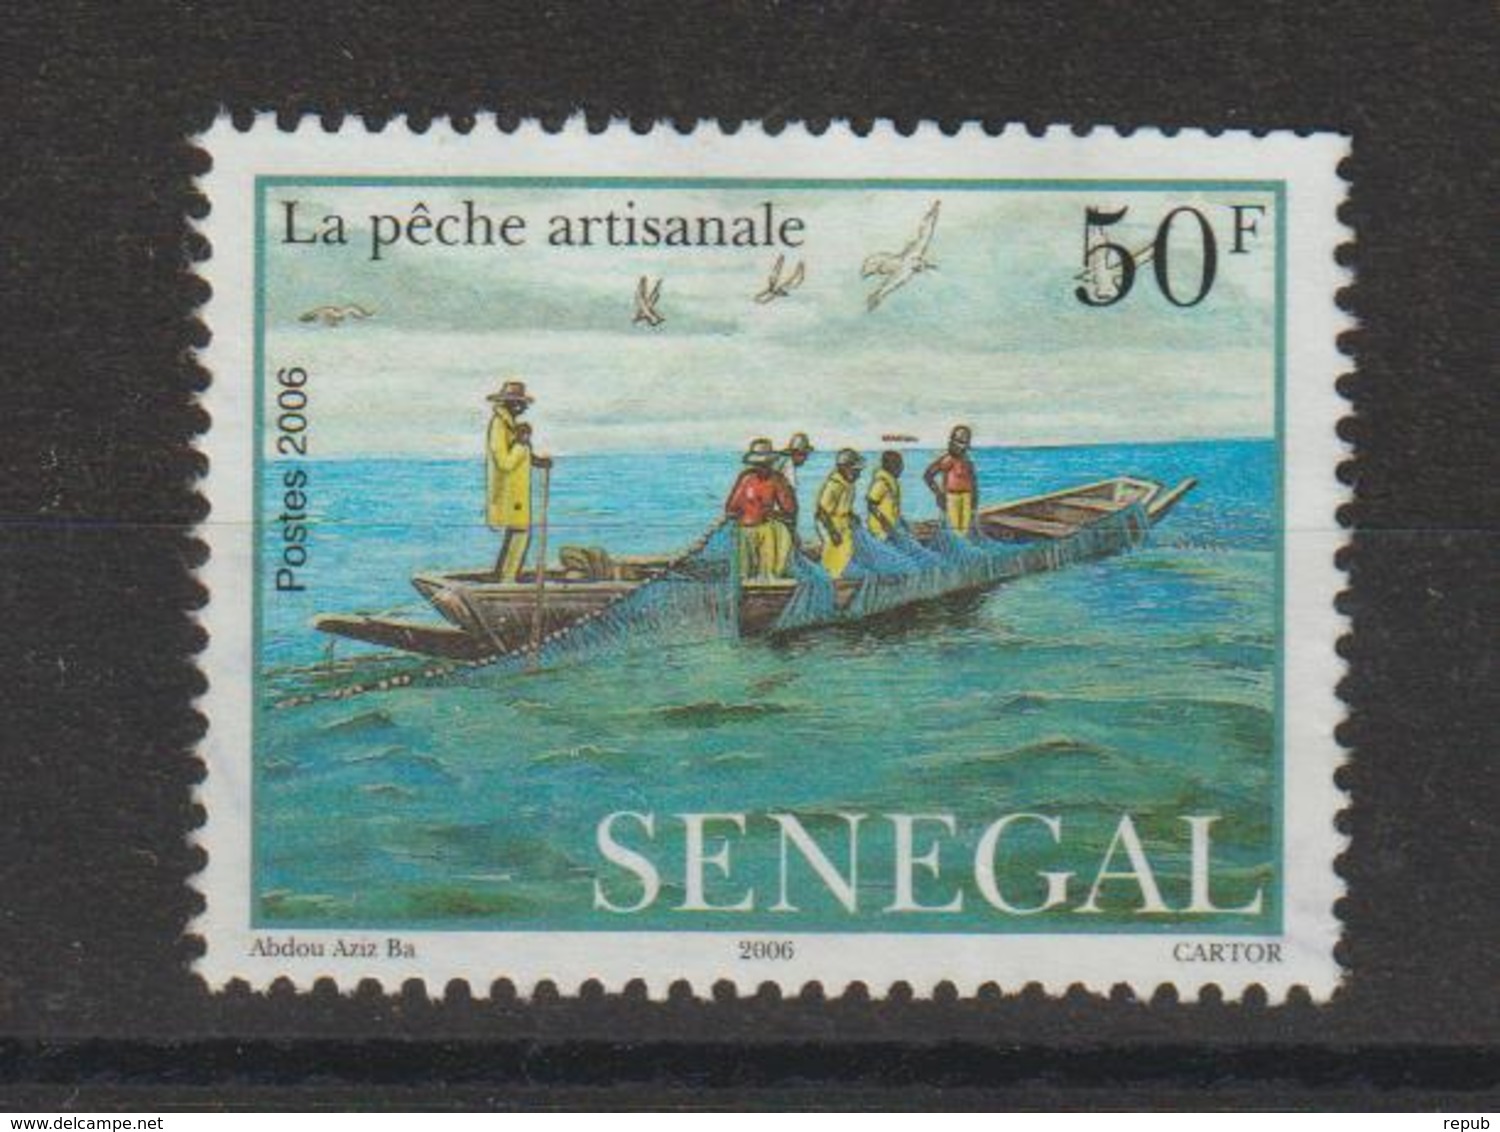 Sénégal 2006 Peche Artisanale Oblit. Used - Senegal (1960-...)